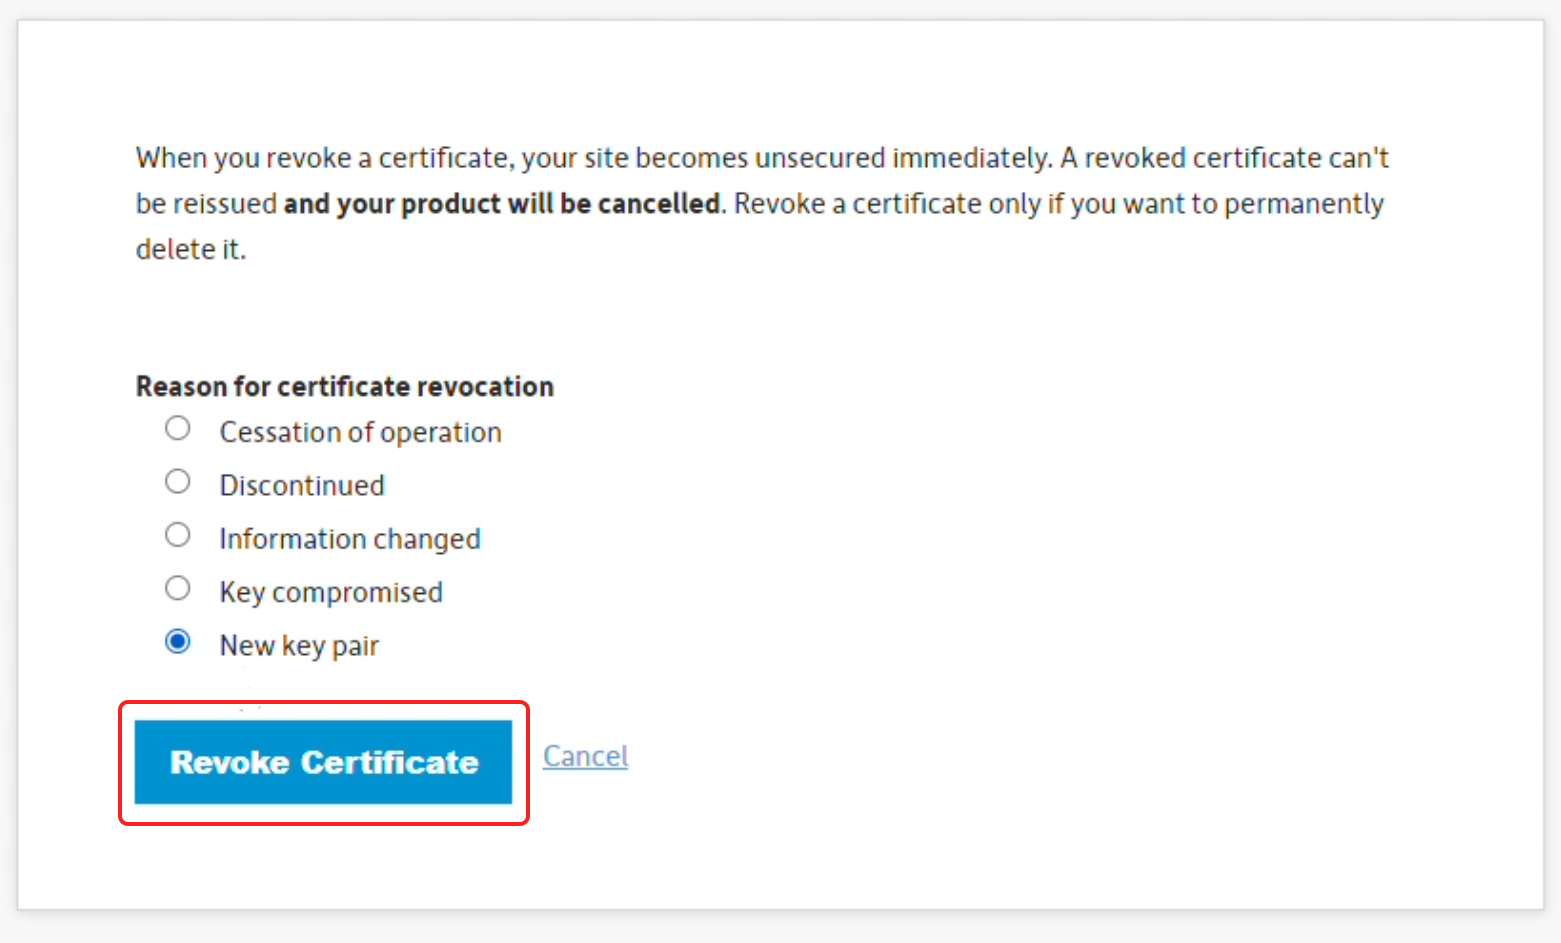 Select Revoke Certificate